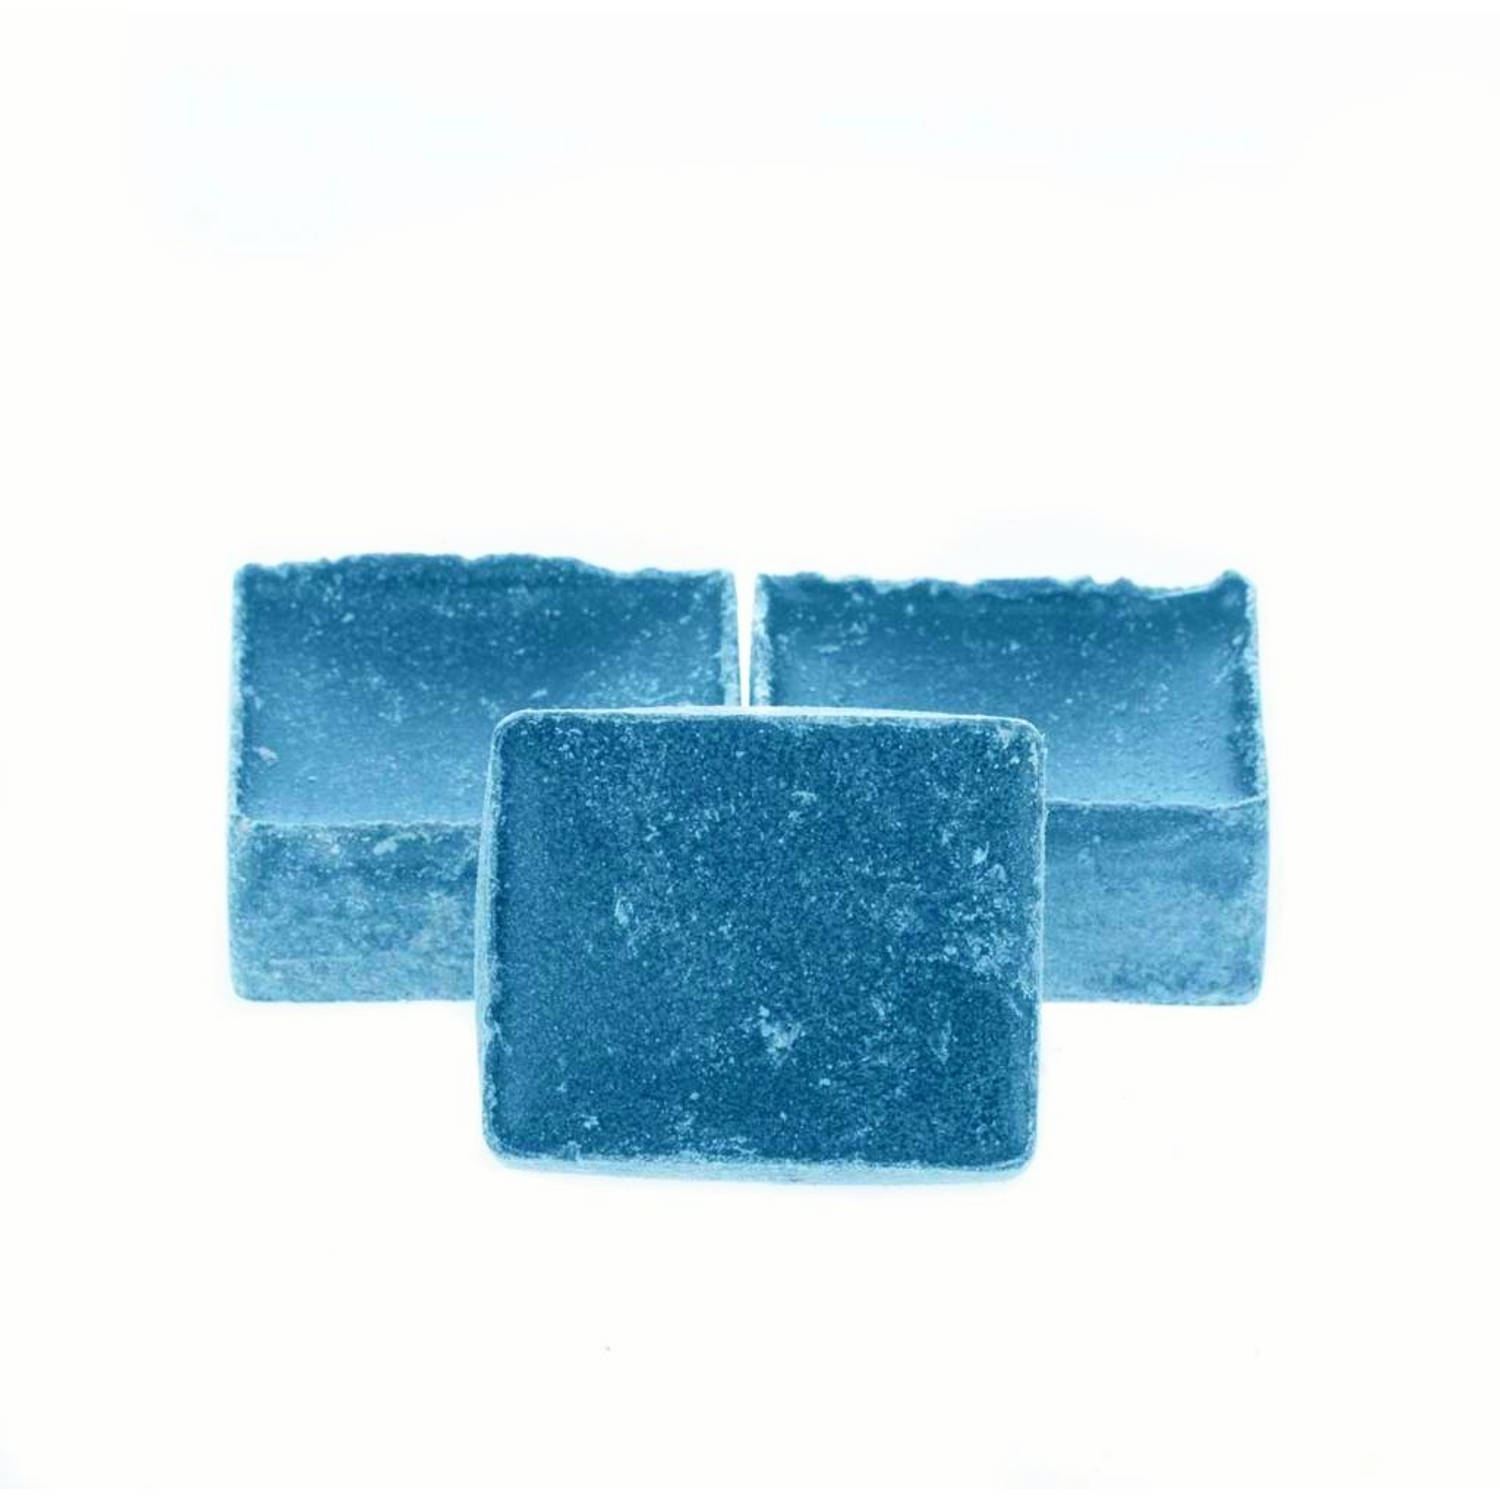 3x Amberblokjes BLUE LADY - geurblokjes uit Marokko - 3 stuks